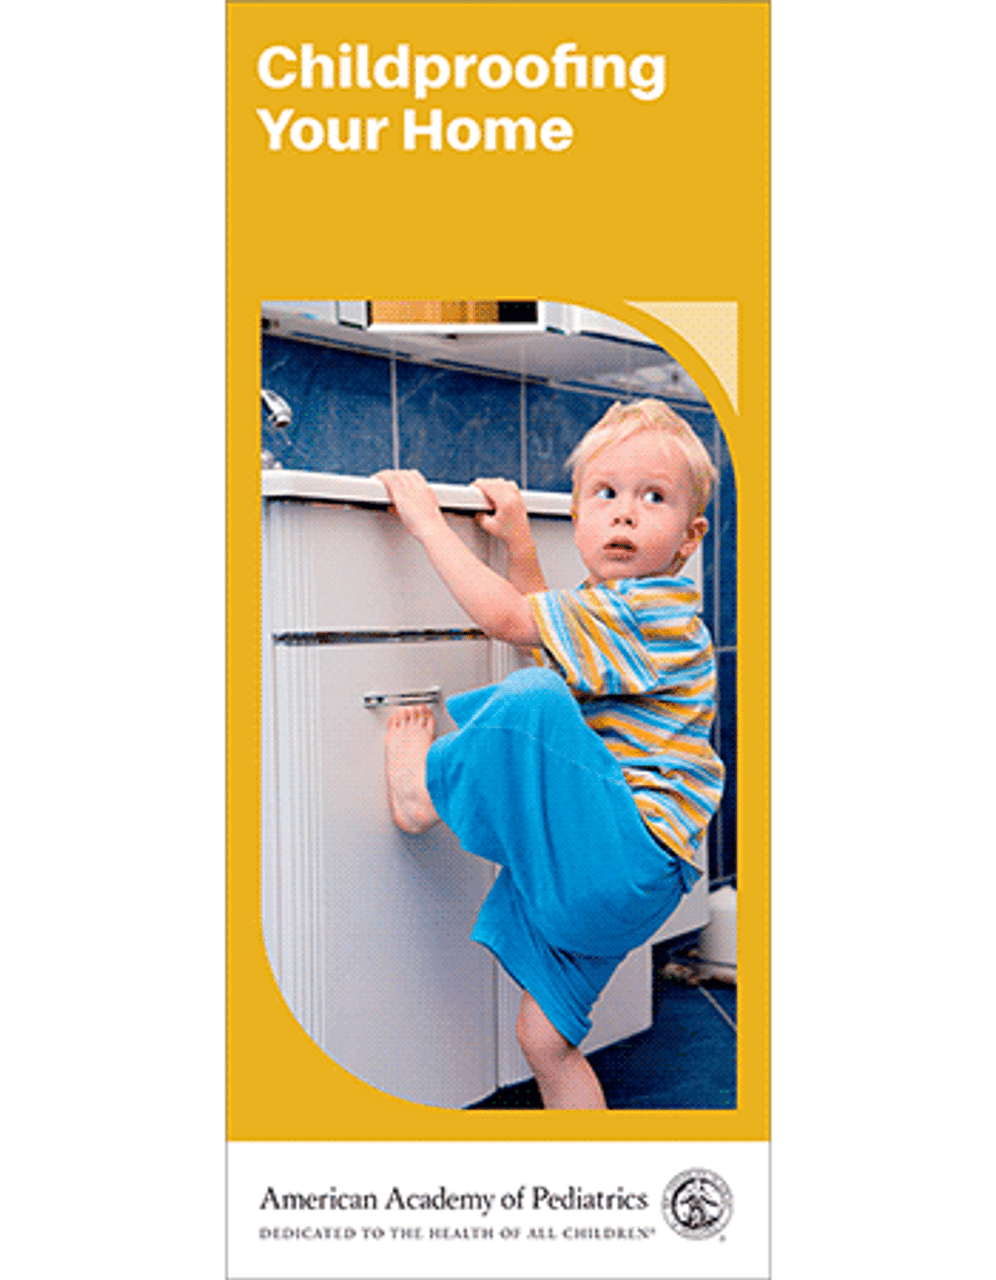 How to Babyproof Your Home - HealthPark Pediatrics